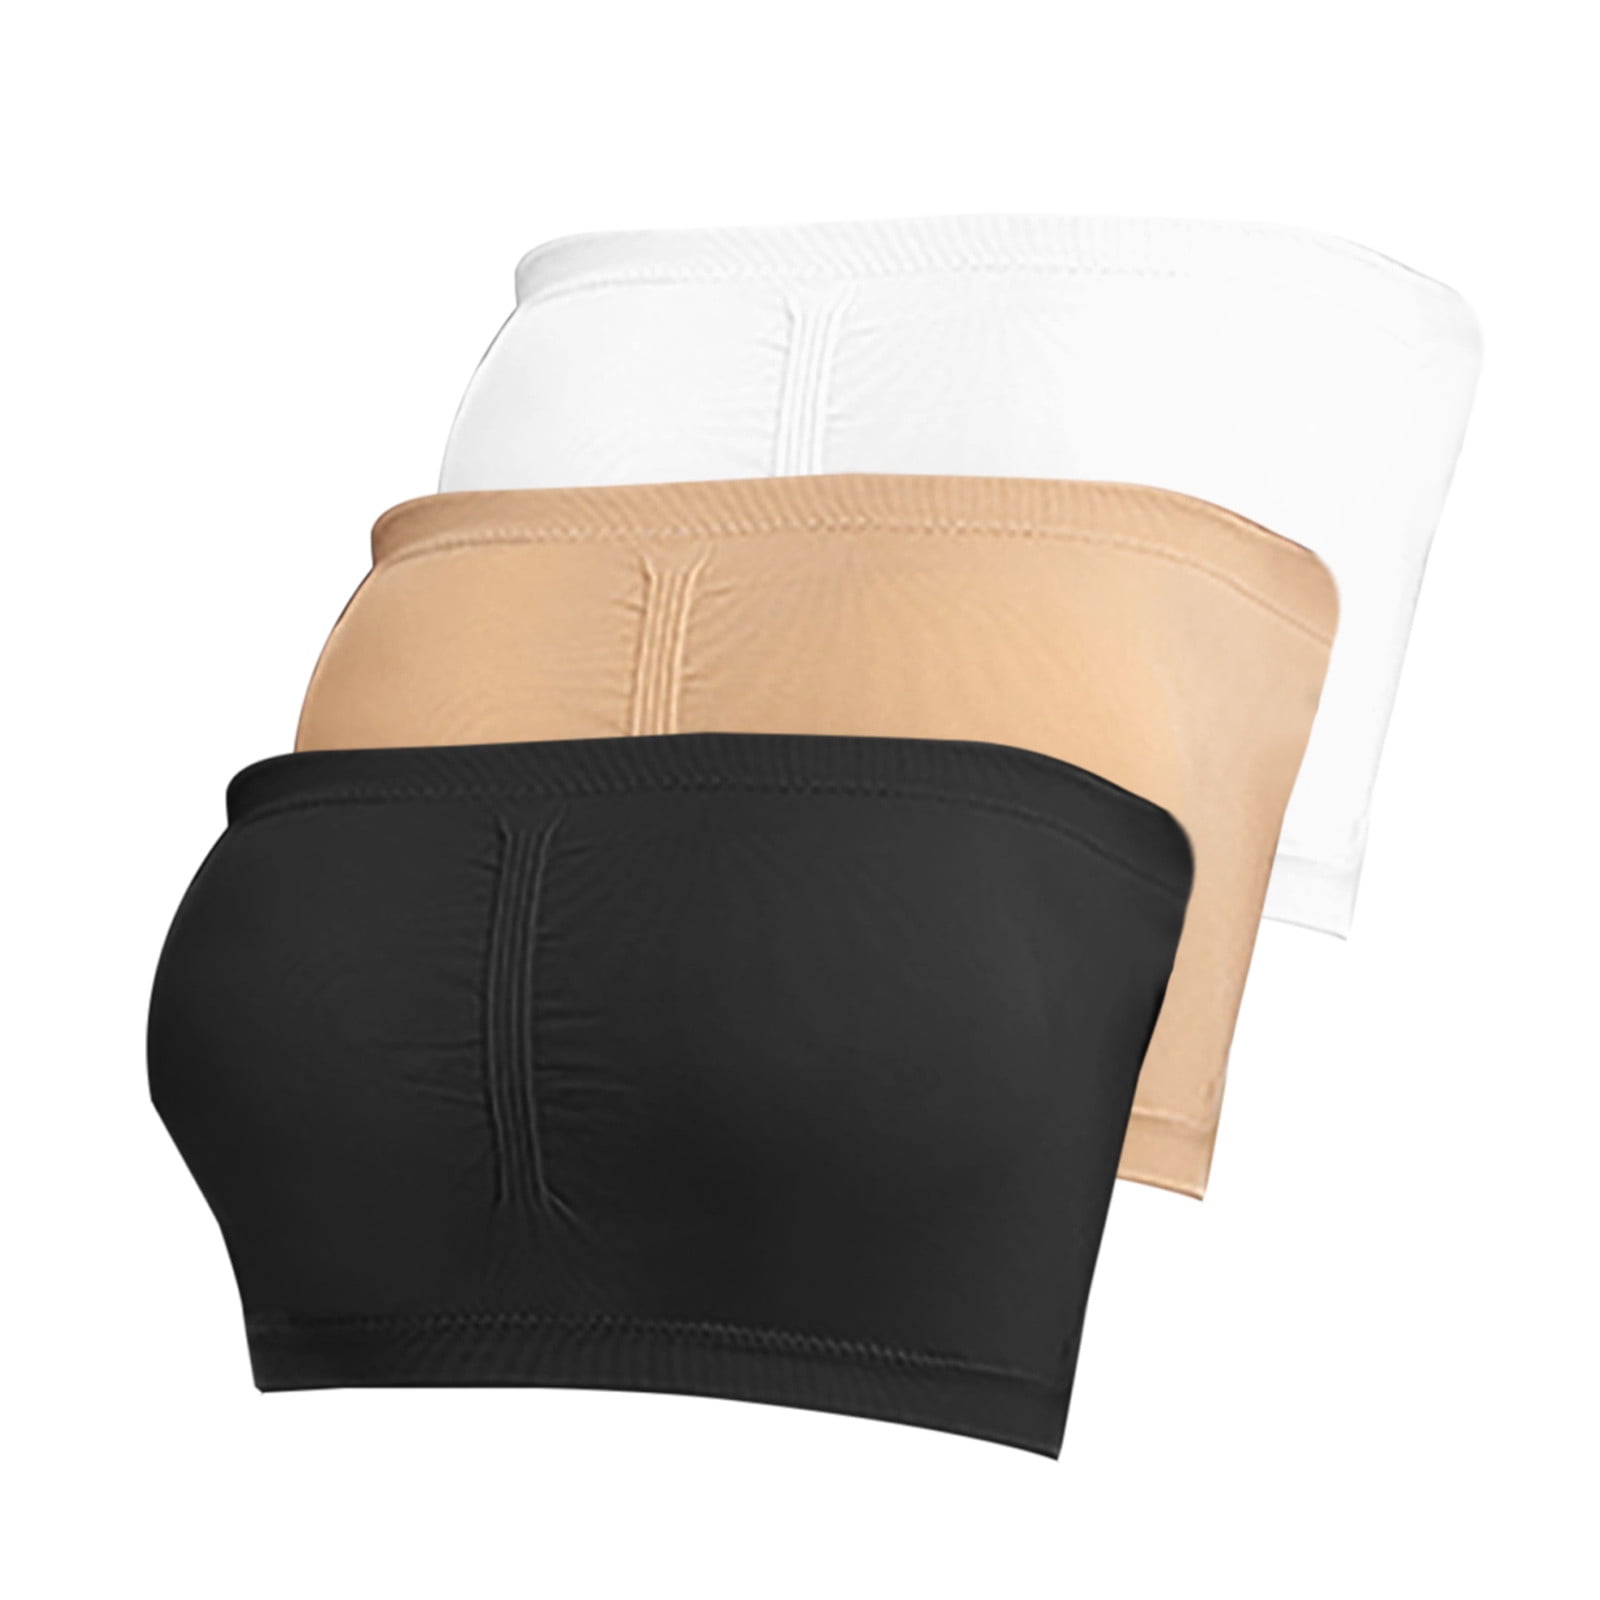 OGLCCG 3 Pack Strapless Bras for Women Comfort Wireless Seamless Padded  Bandeau Bralette Push Up Tube Top Bra for Everyday Wear 